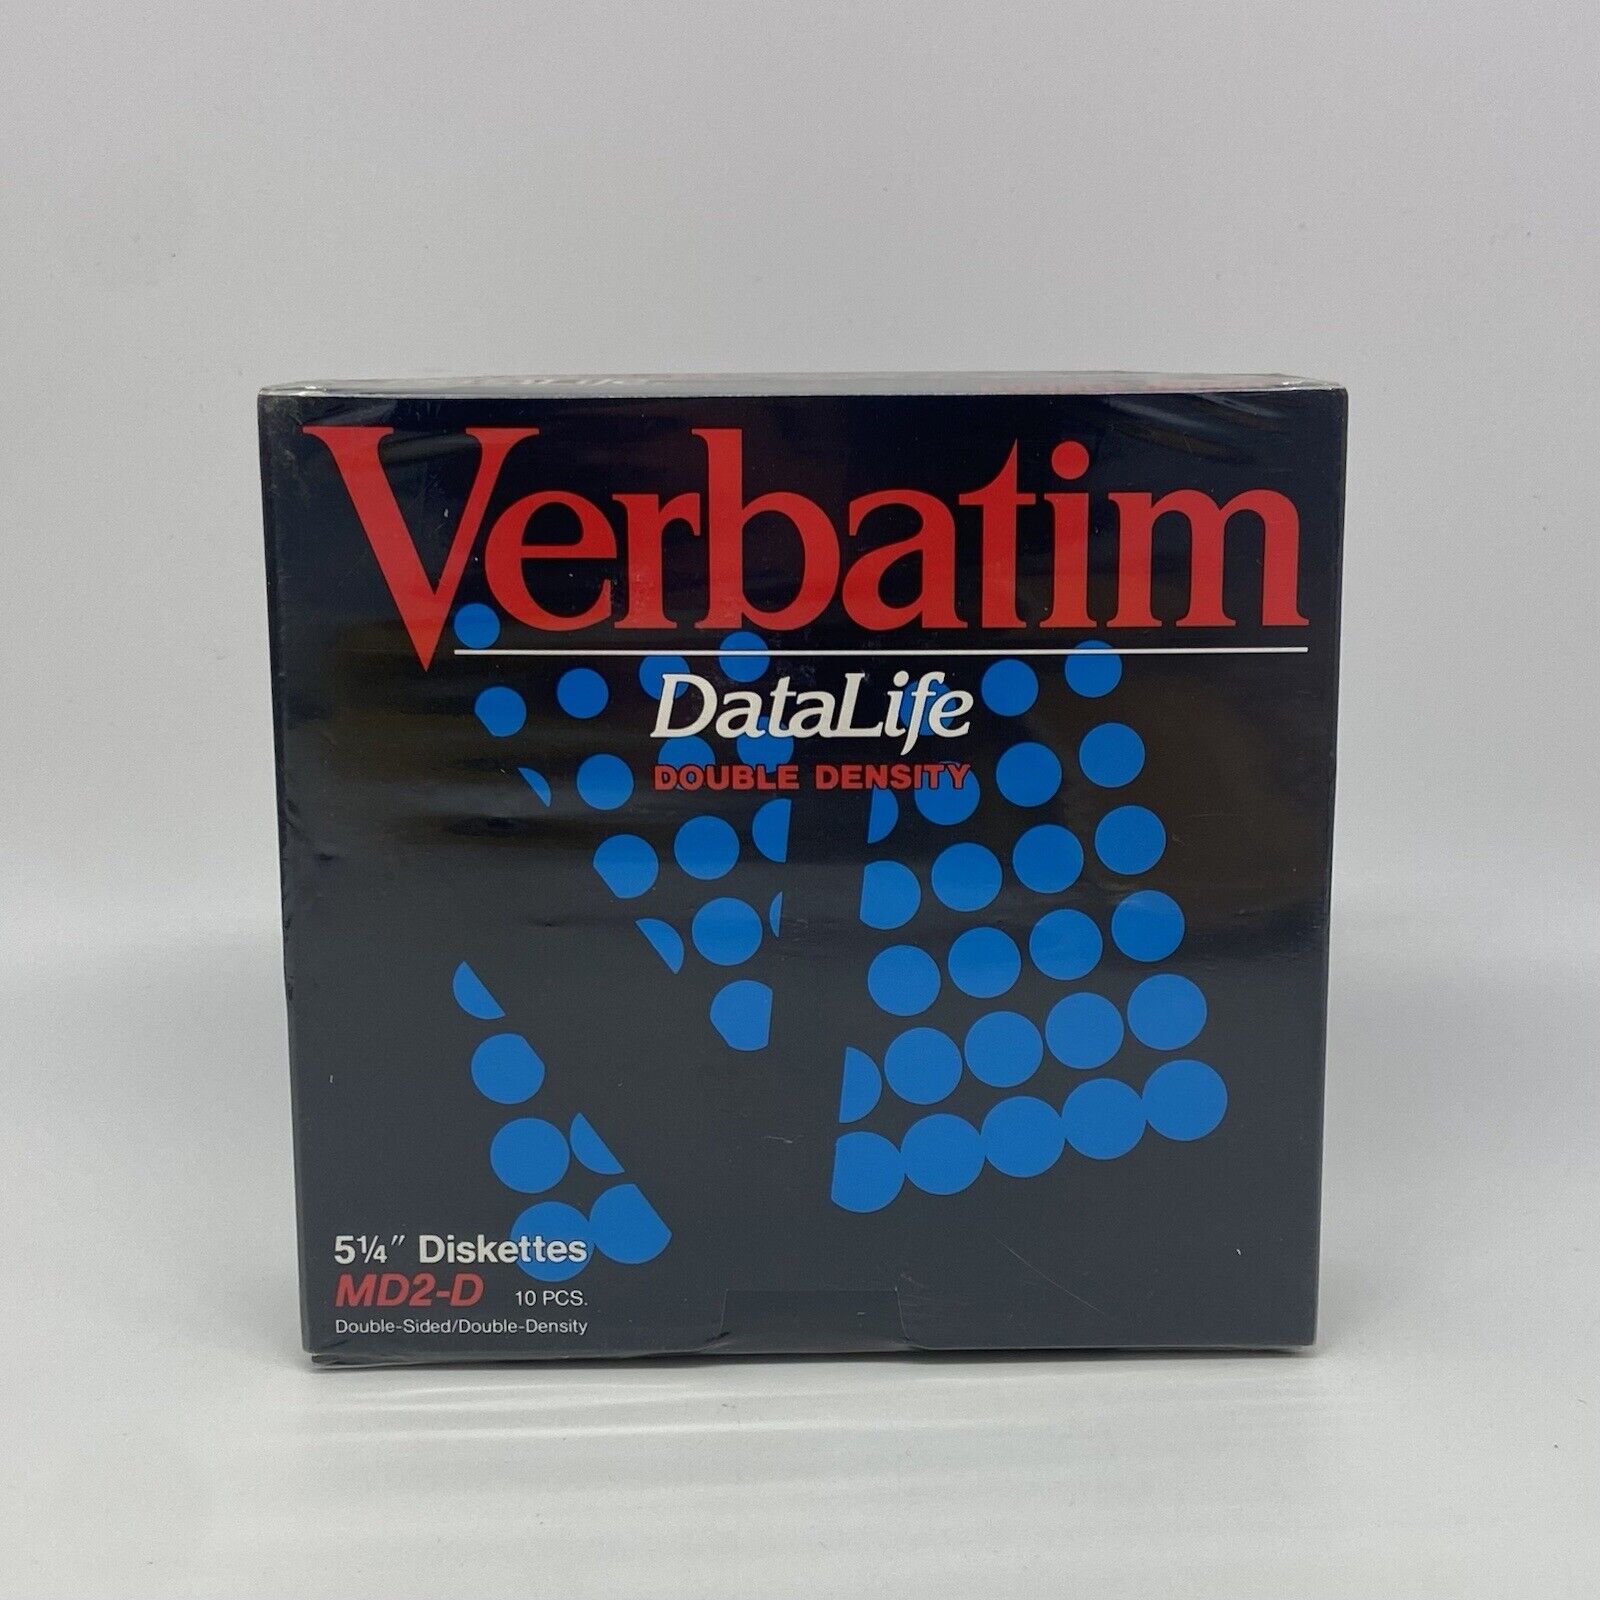 Verbatim DataLife Double Density 5-1/4